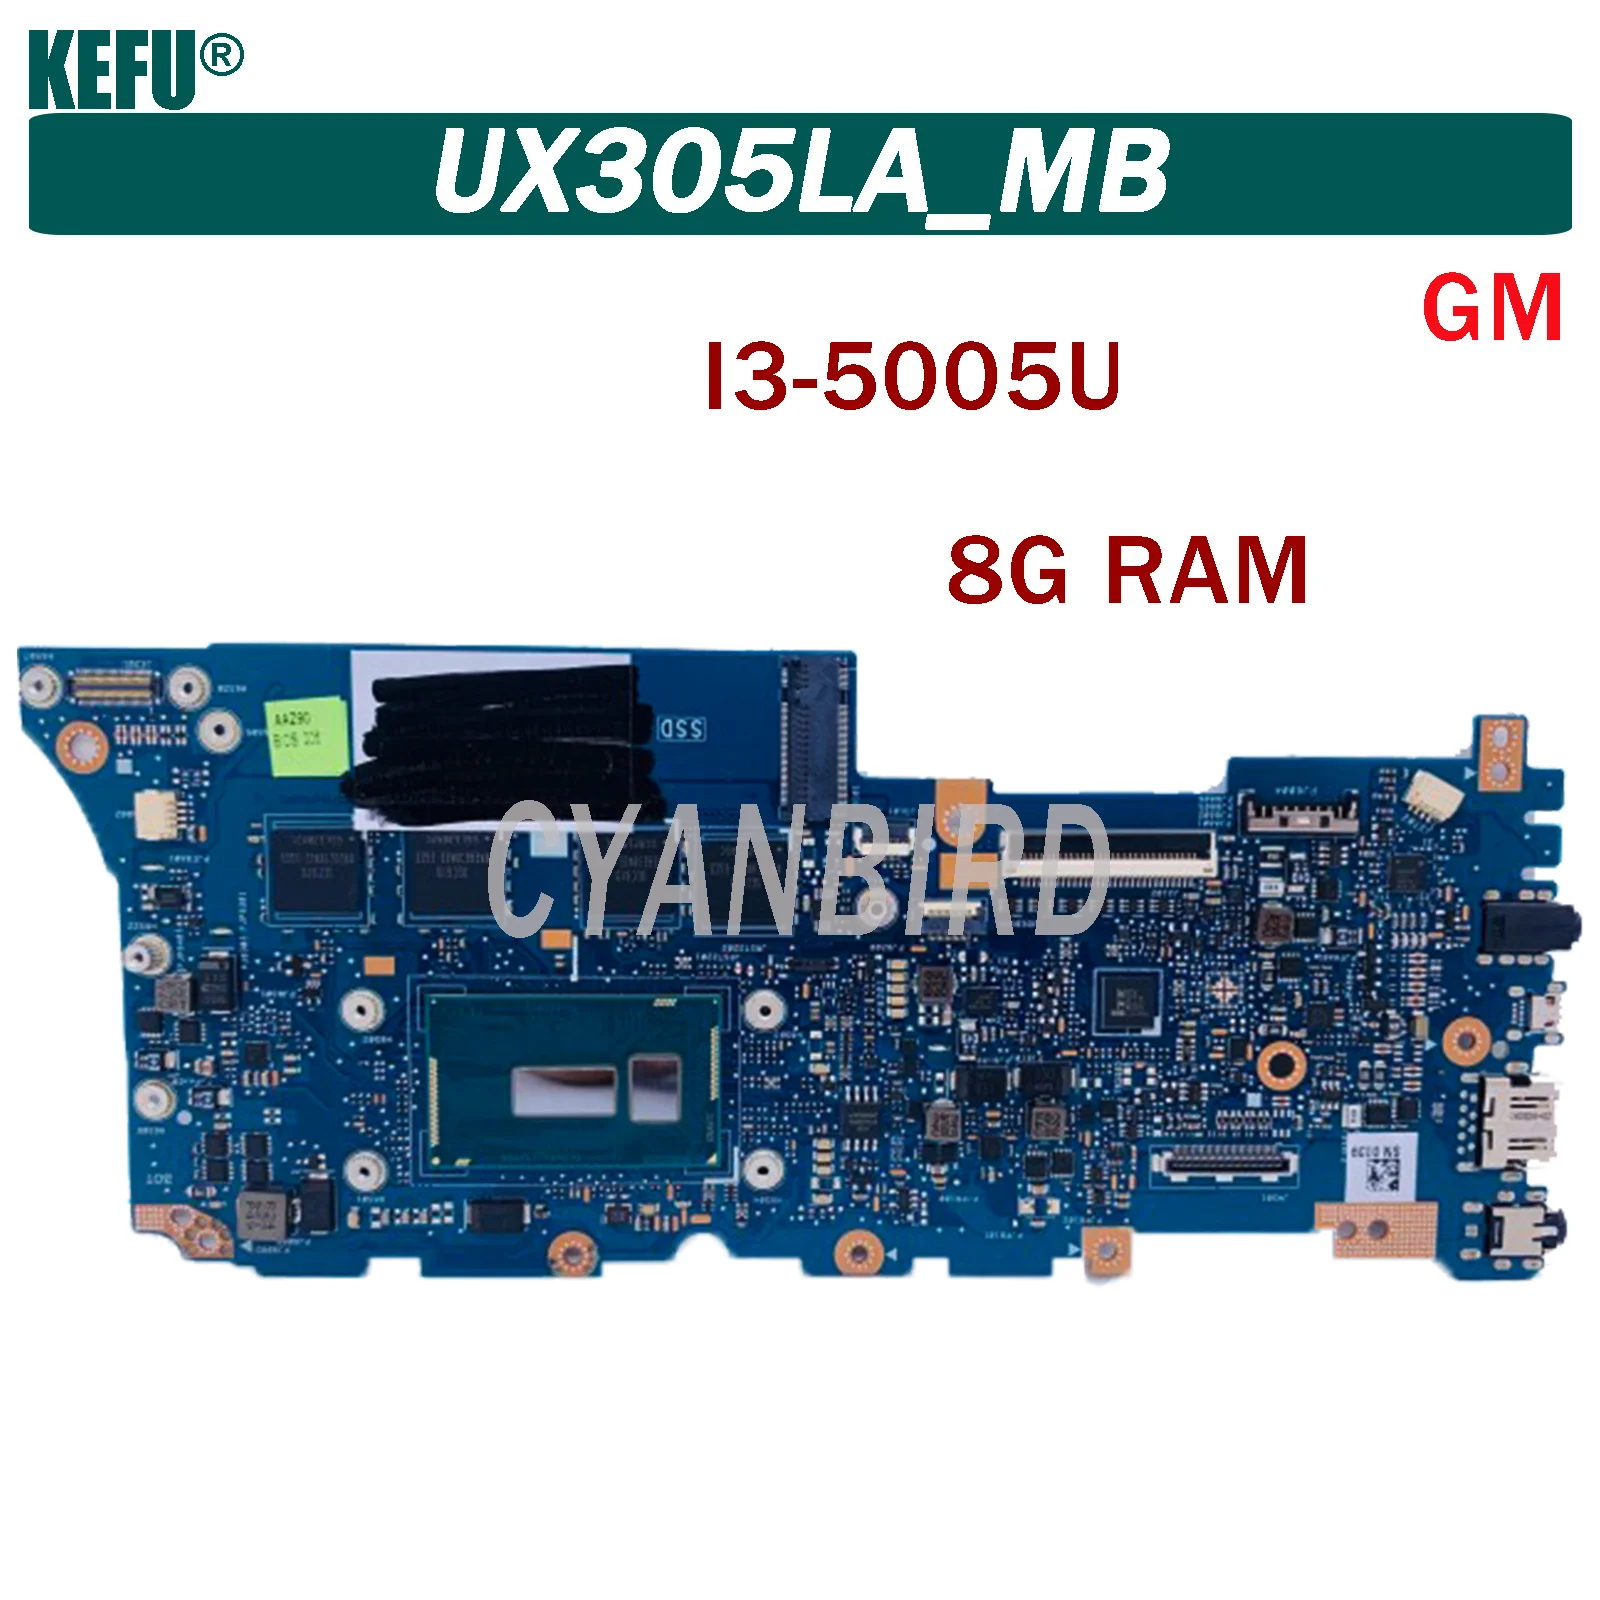 

KEFU UX305LA original mainboard for ASUS ZenBook UX305LA UX305L with 8GB-RAM I3-5005U Laptop motherboard